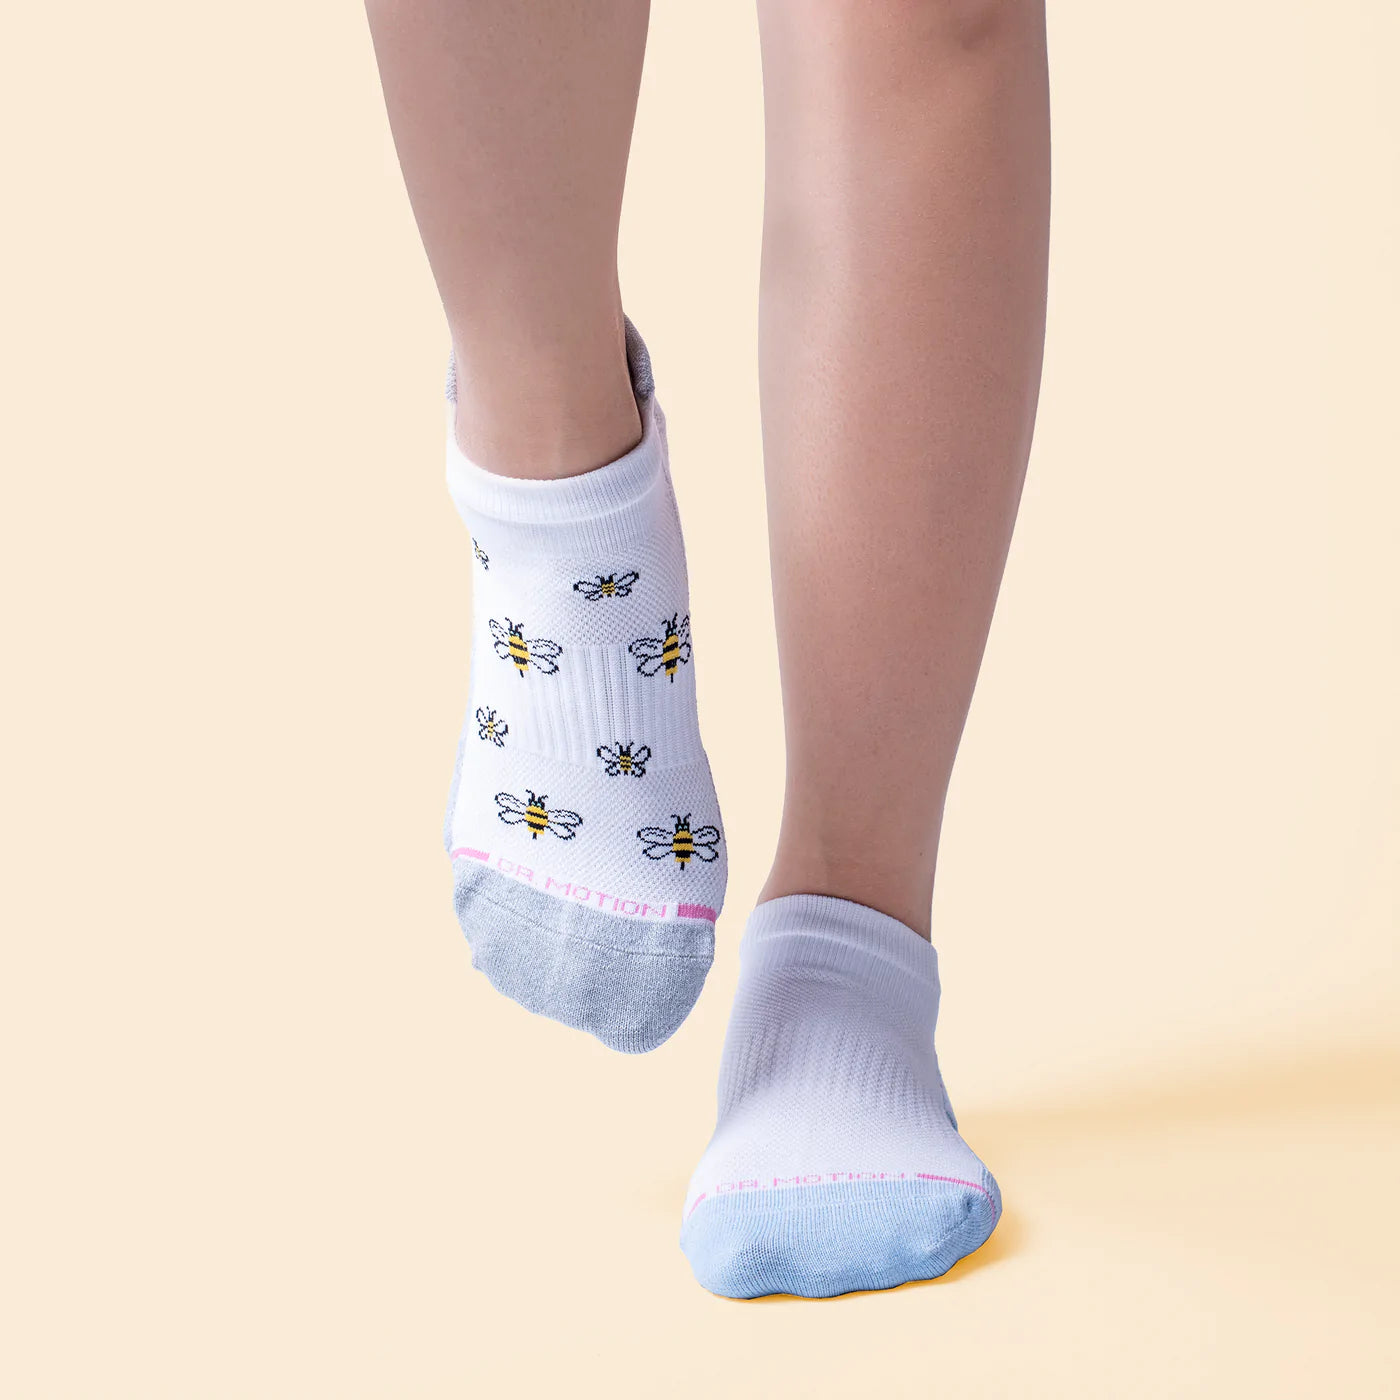 Benefits of Ankle Compression Socks